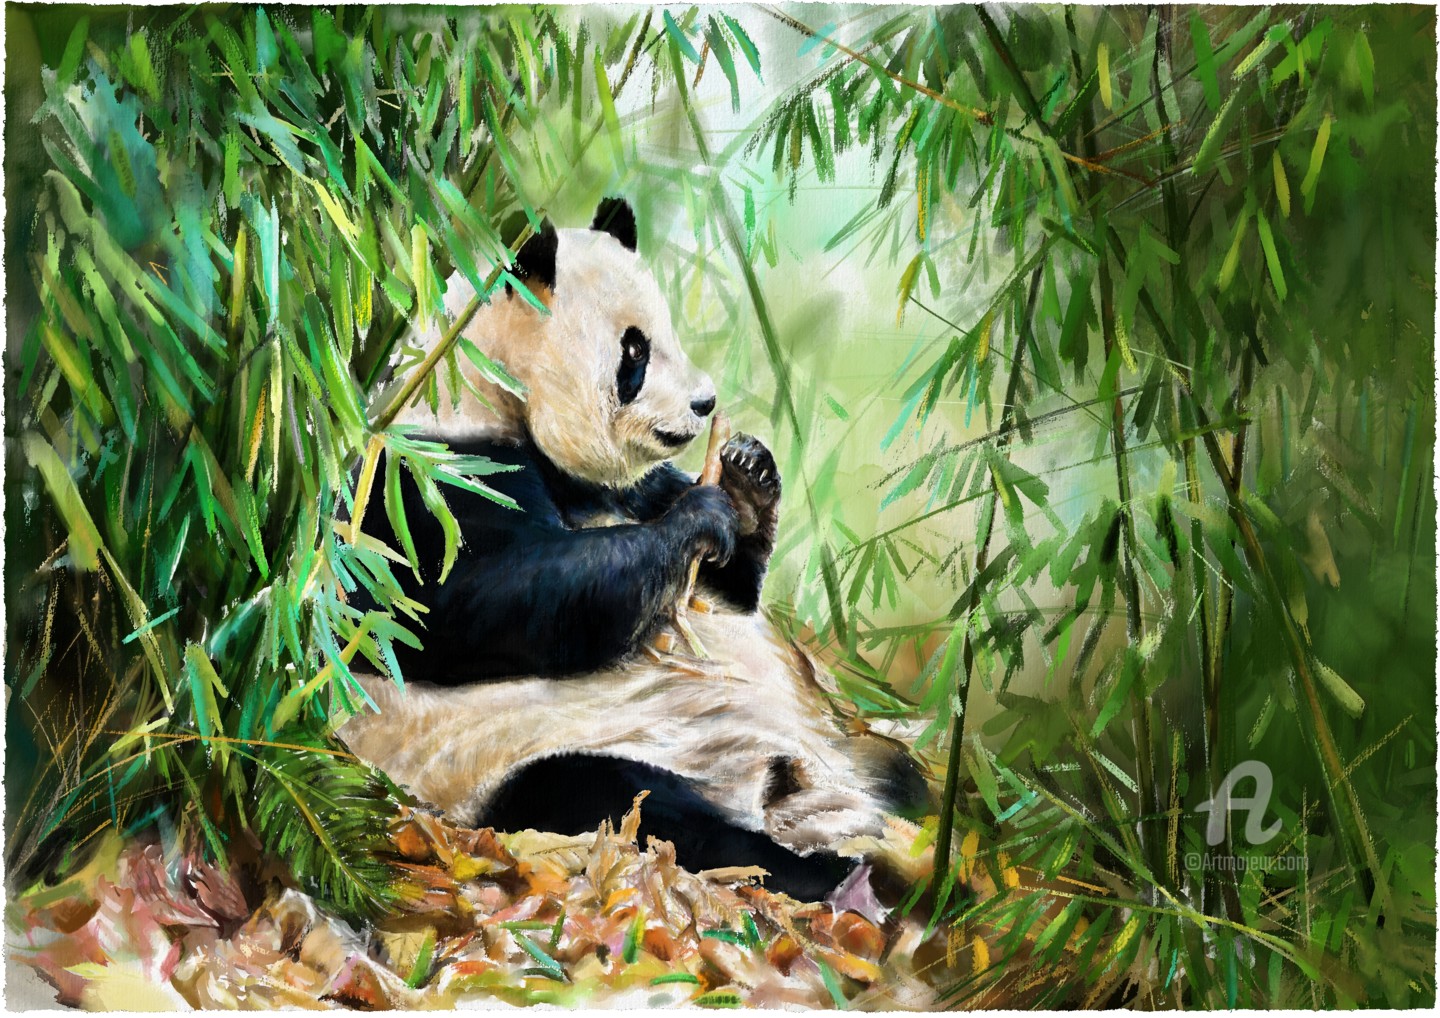 bamboo forest panda